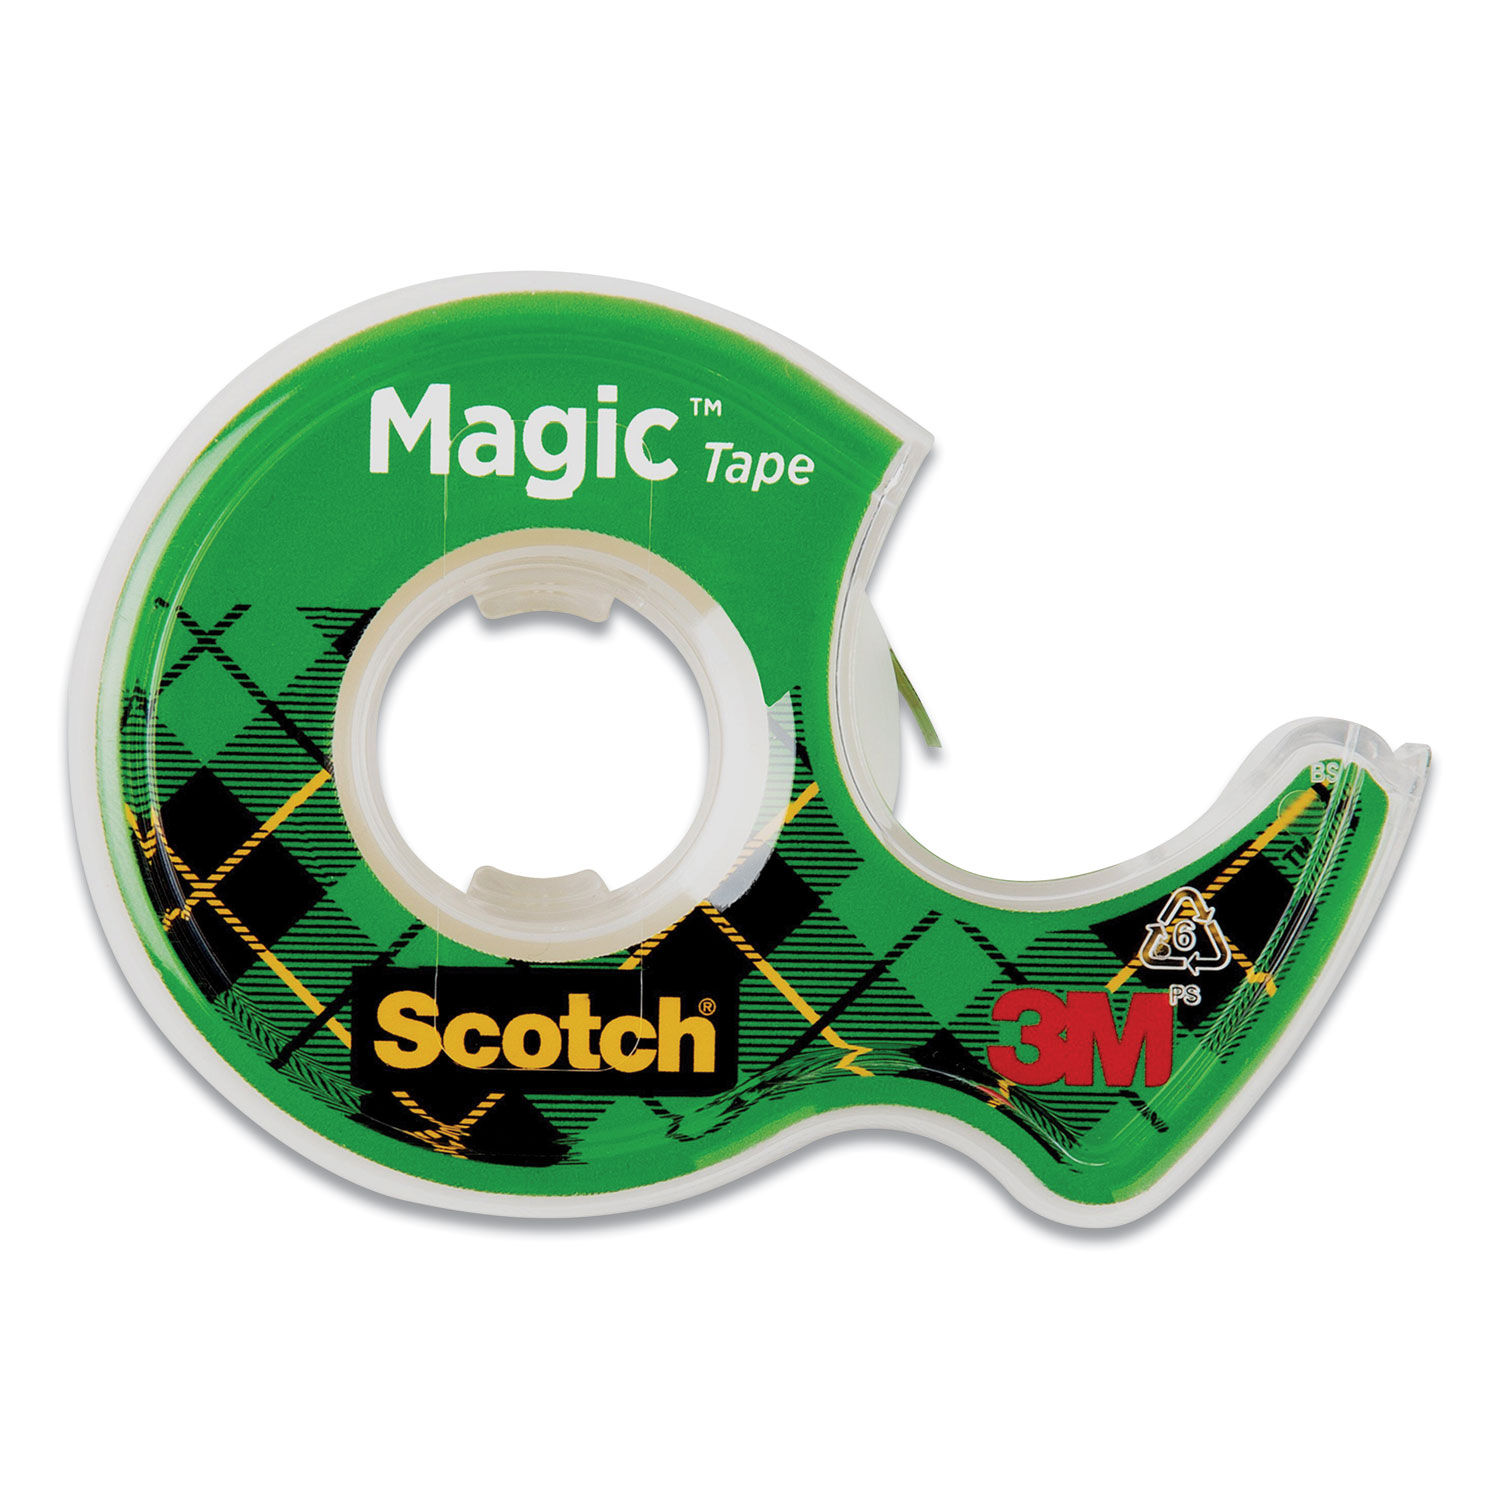 Magic Tape in Handheld Dispenser by Scotchandreg; MMM119